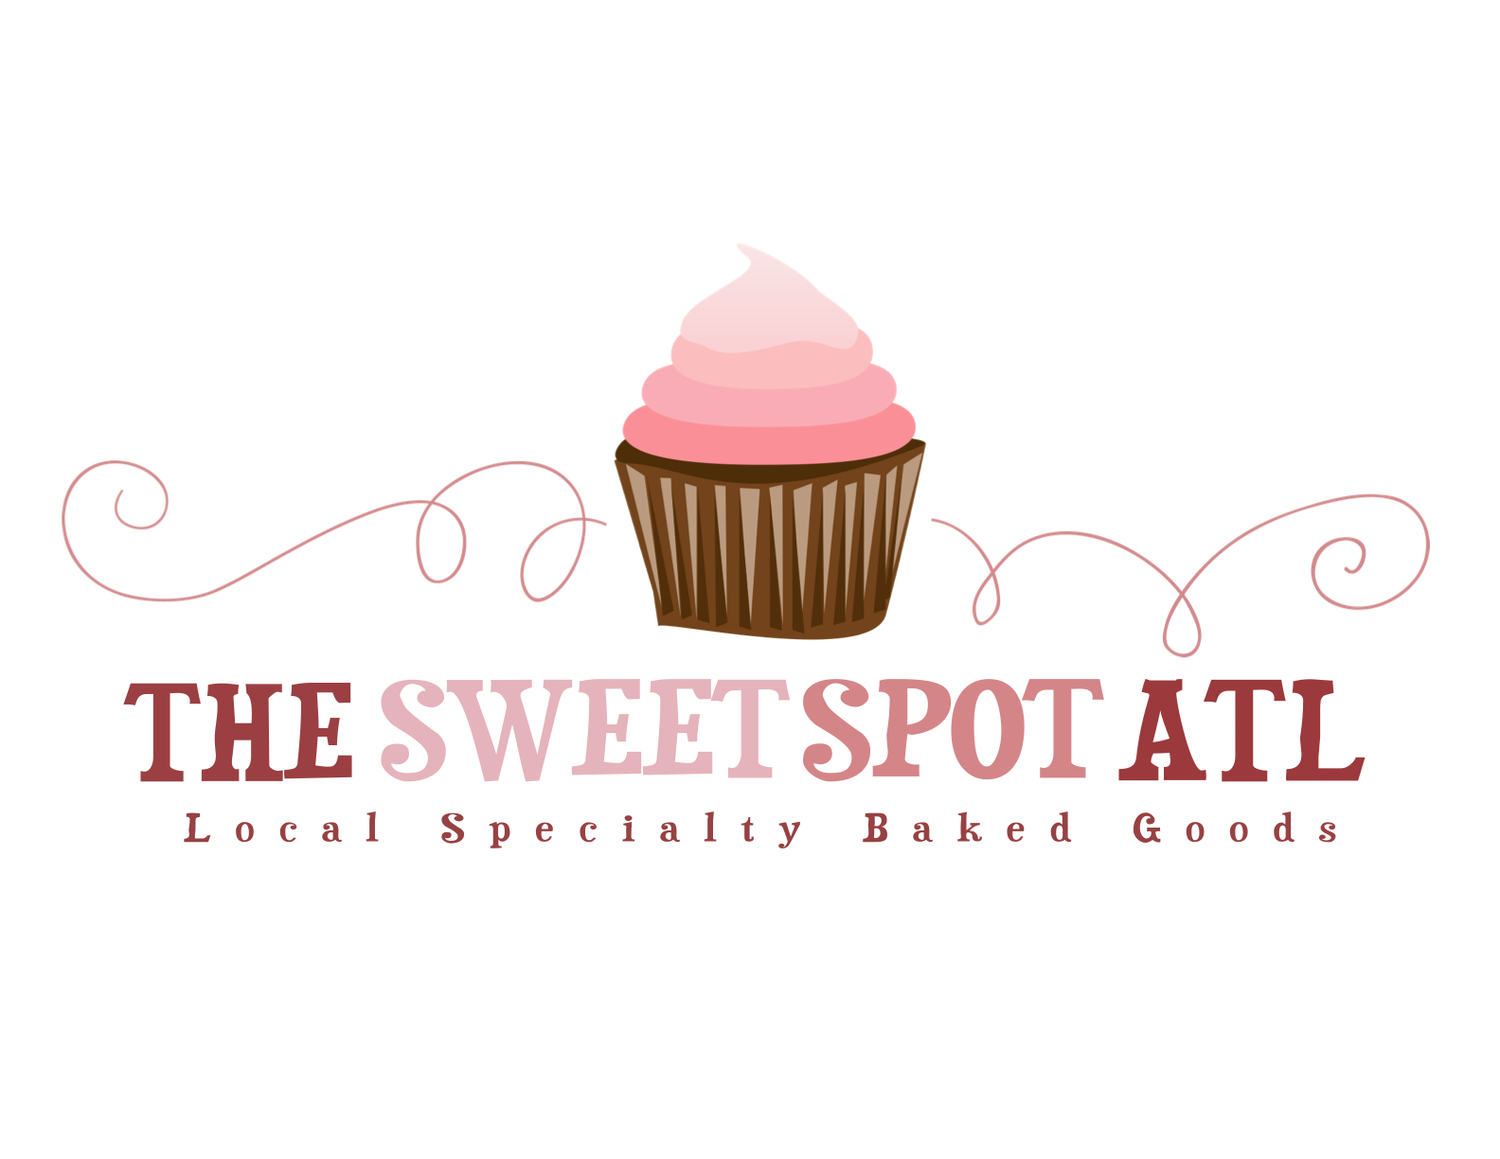 The SweetSpot ATL